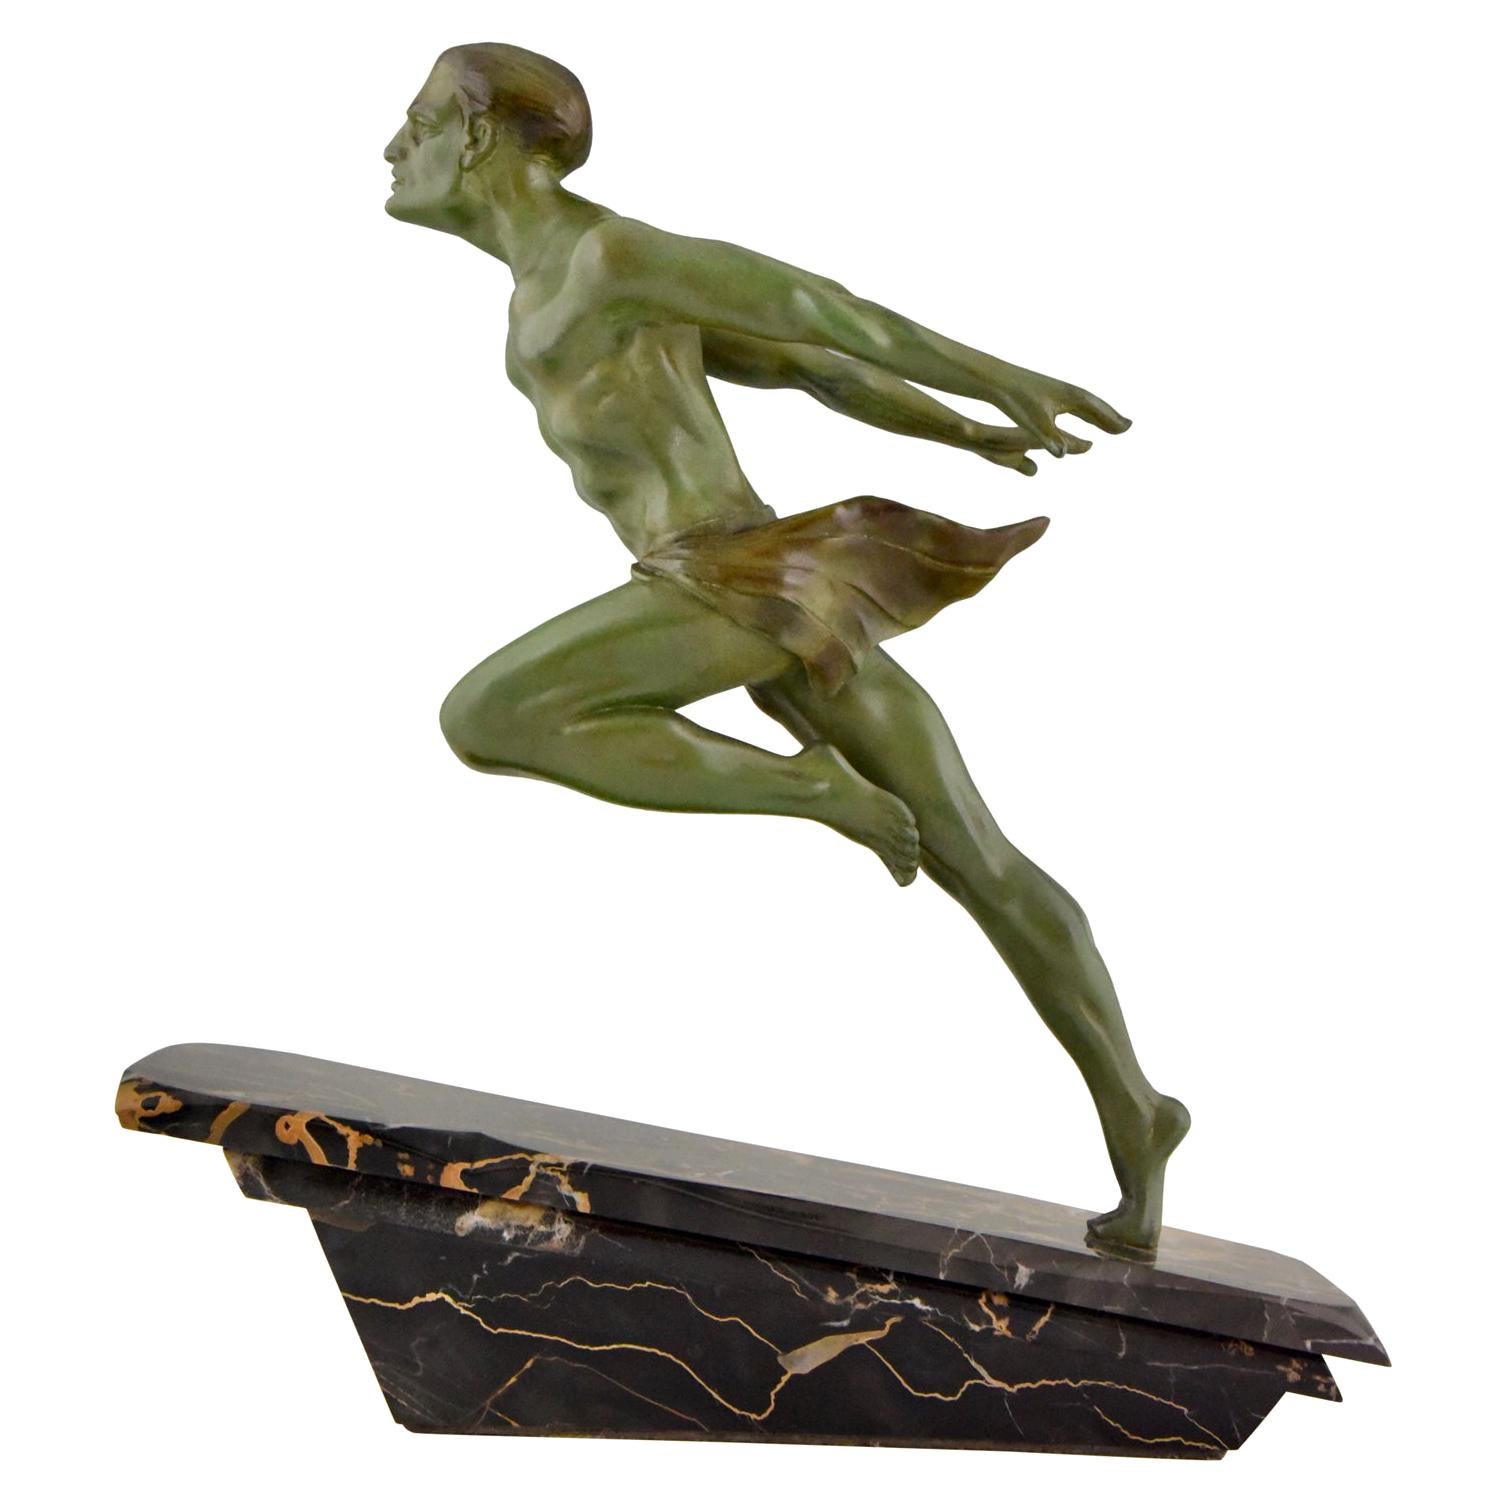 Art Deco Sculpture Running Man or Athlete L. Valderi, France, 1930